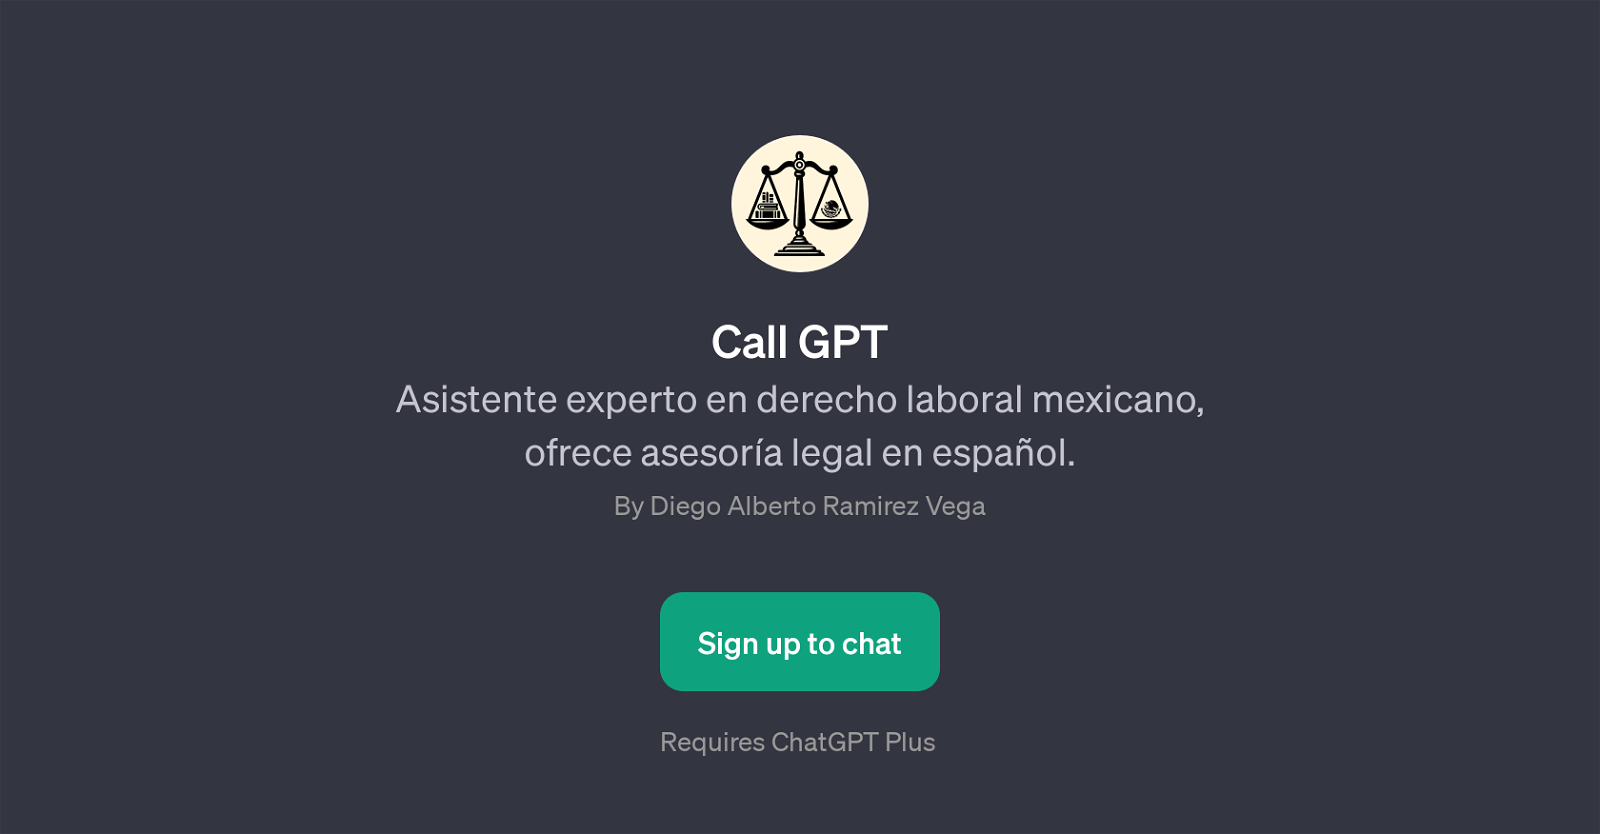 Call GPT website